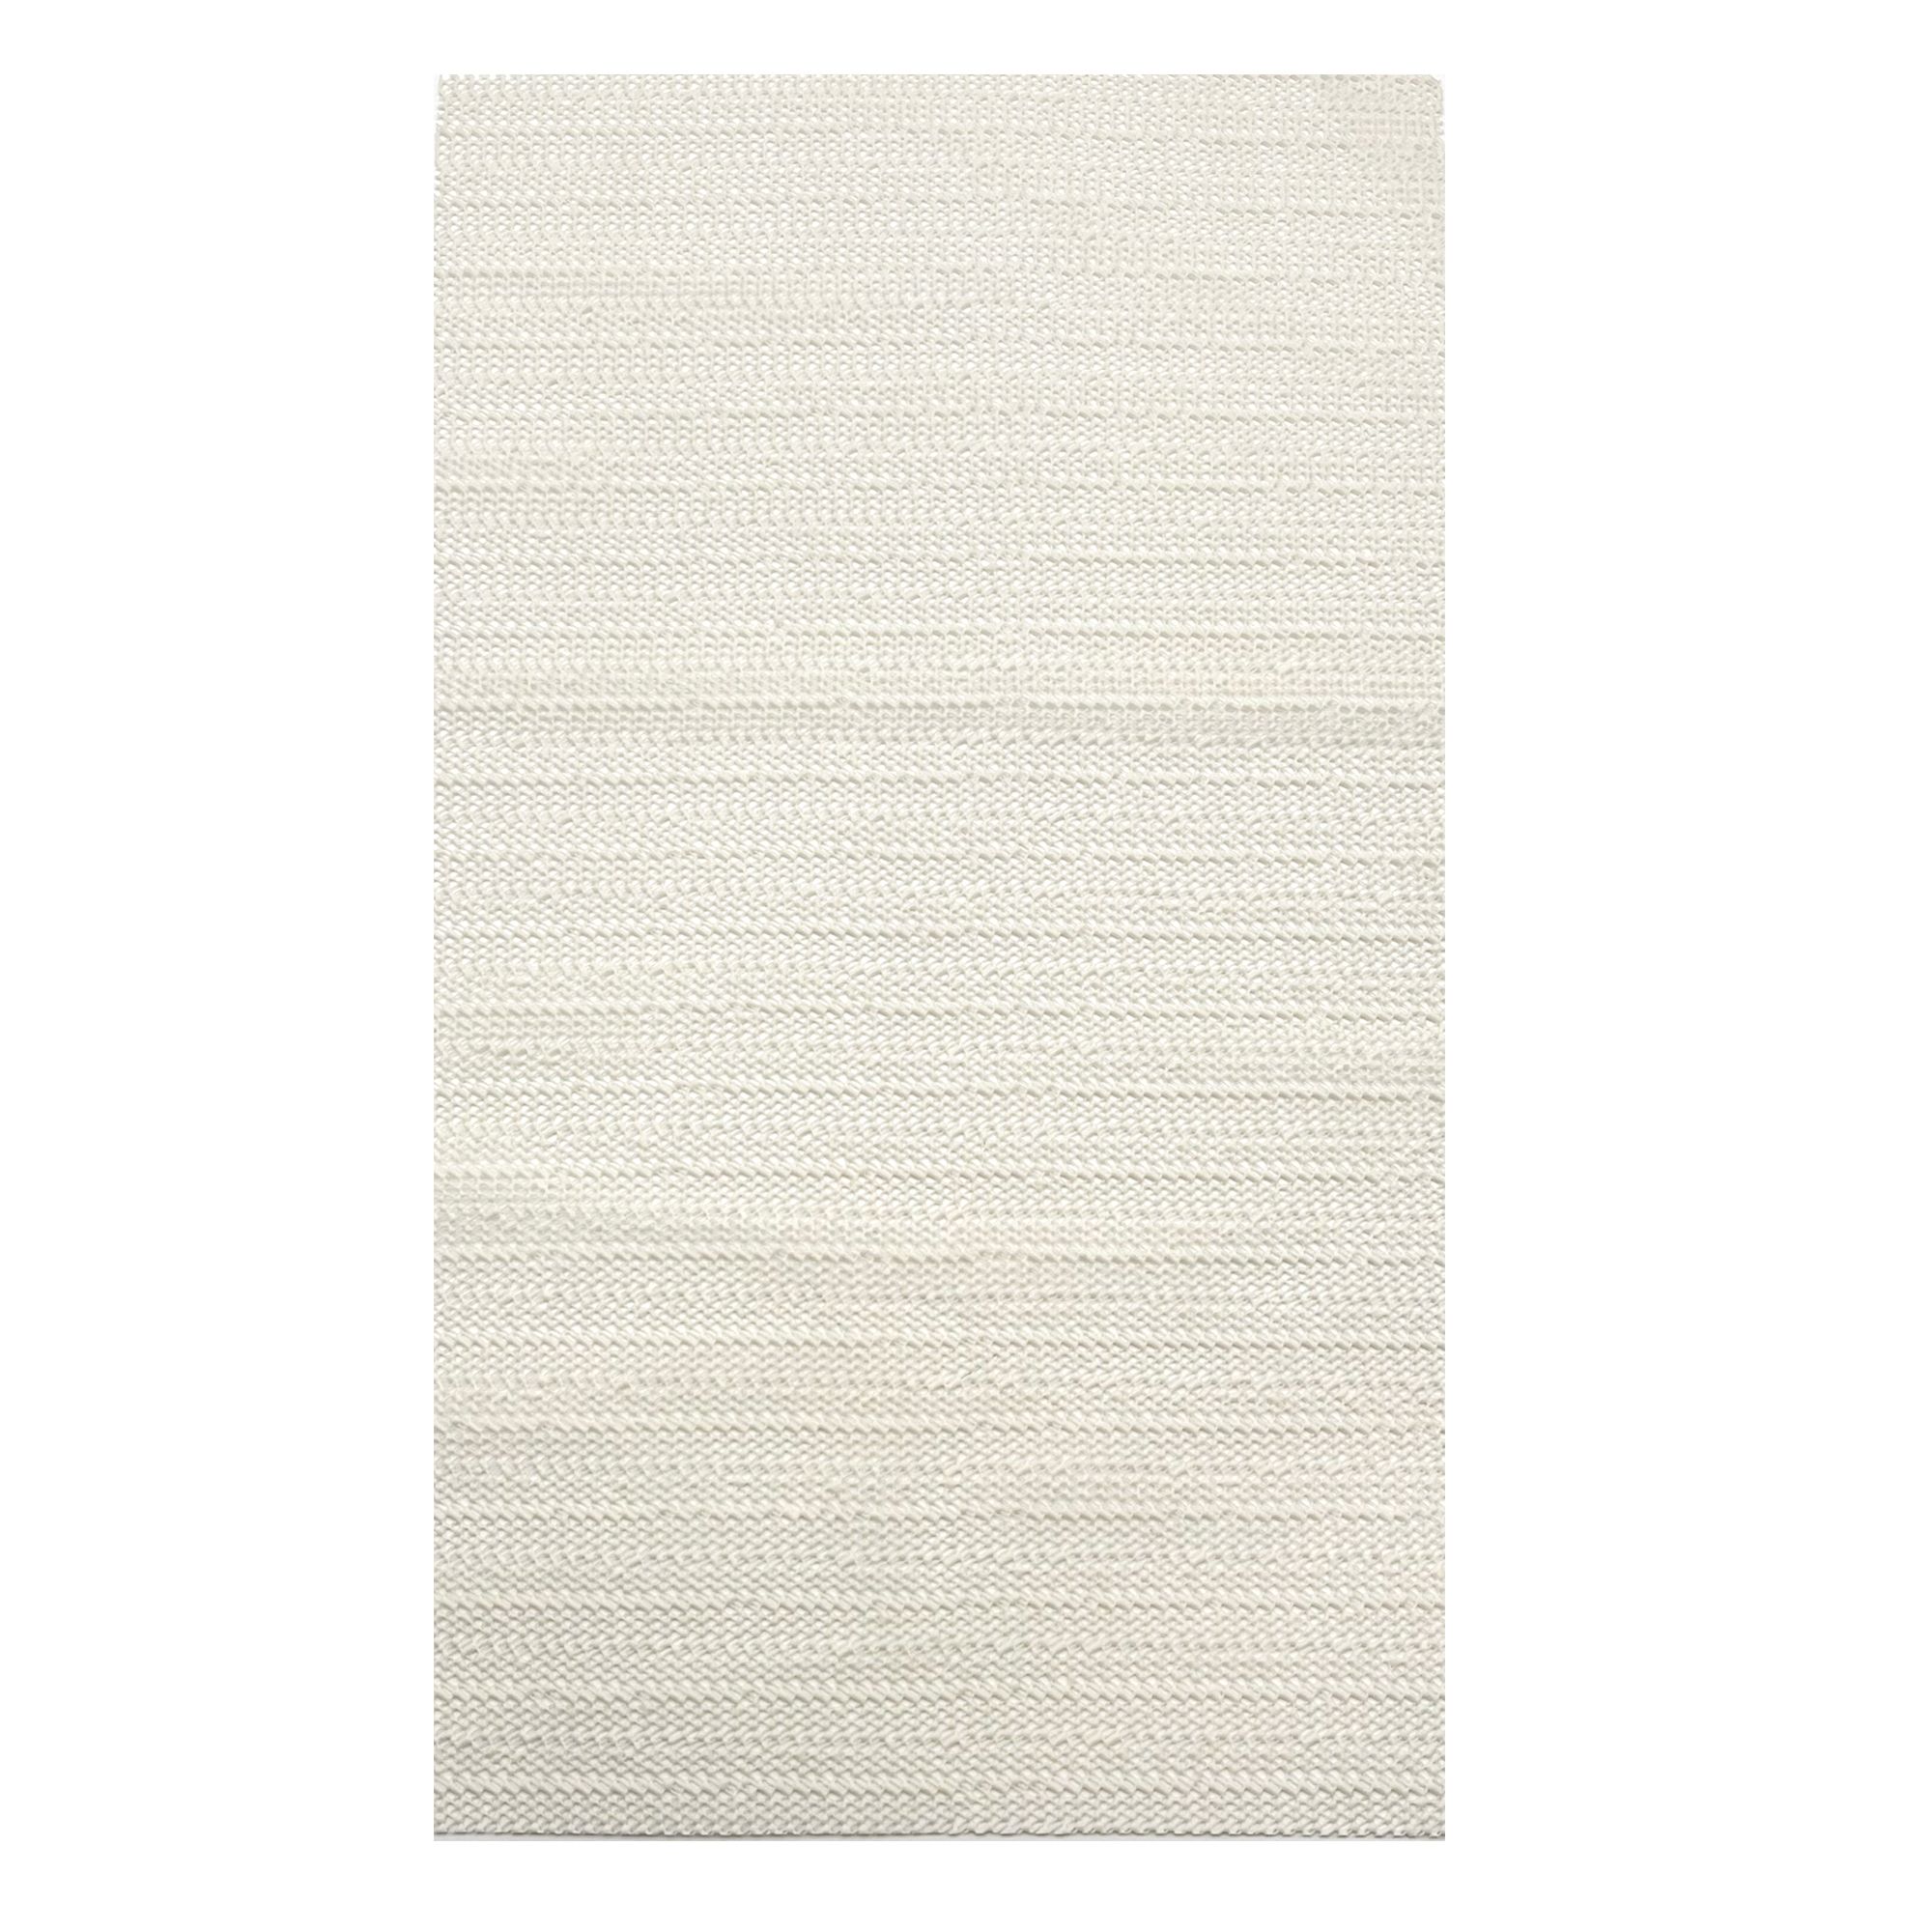 Colours Harrieta Black & white Diamond Door mat, 75cm x 45cm